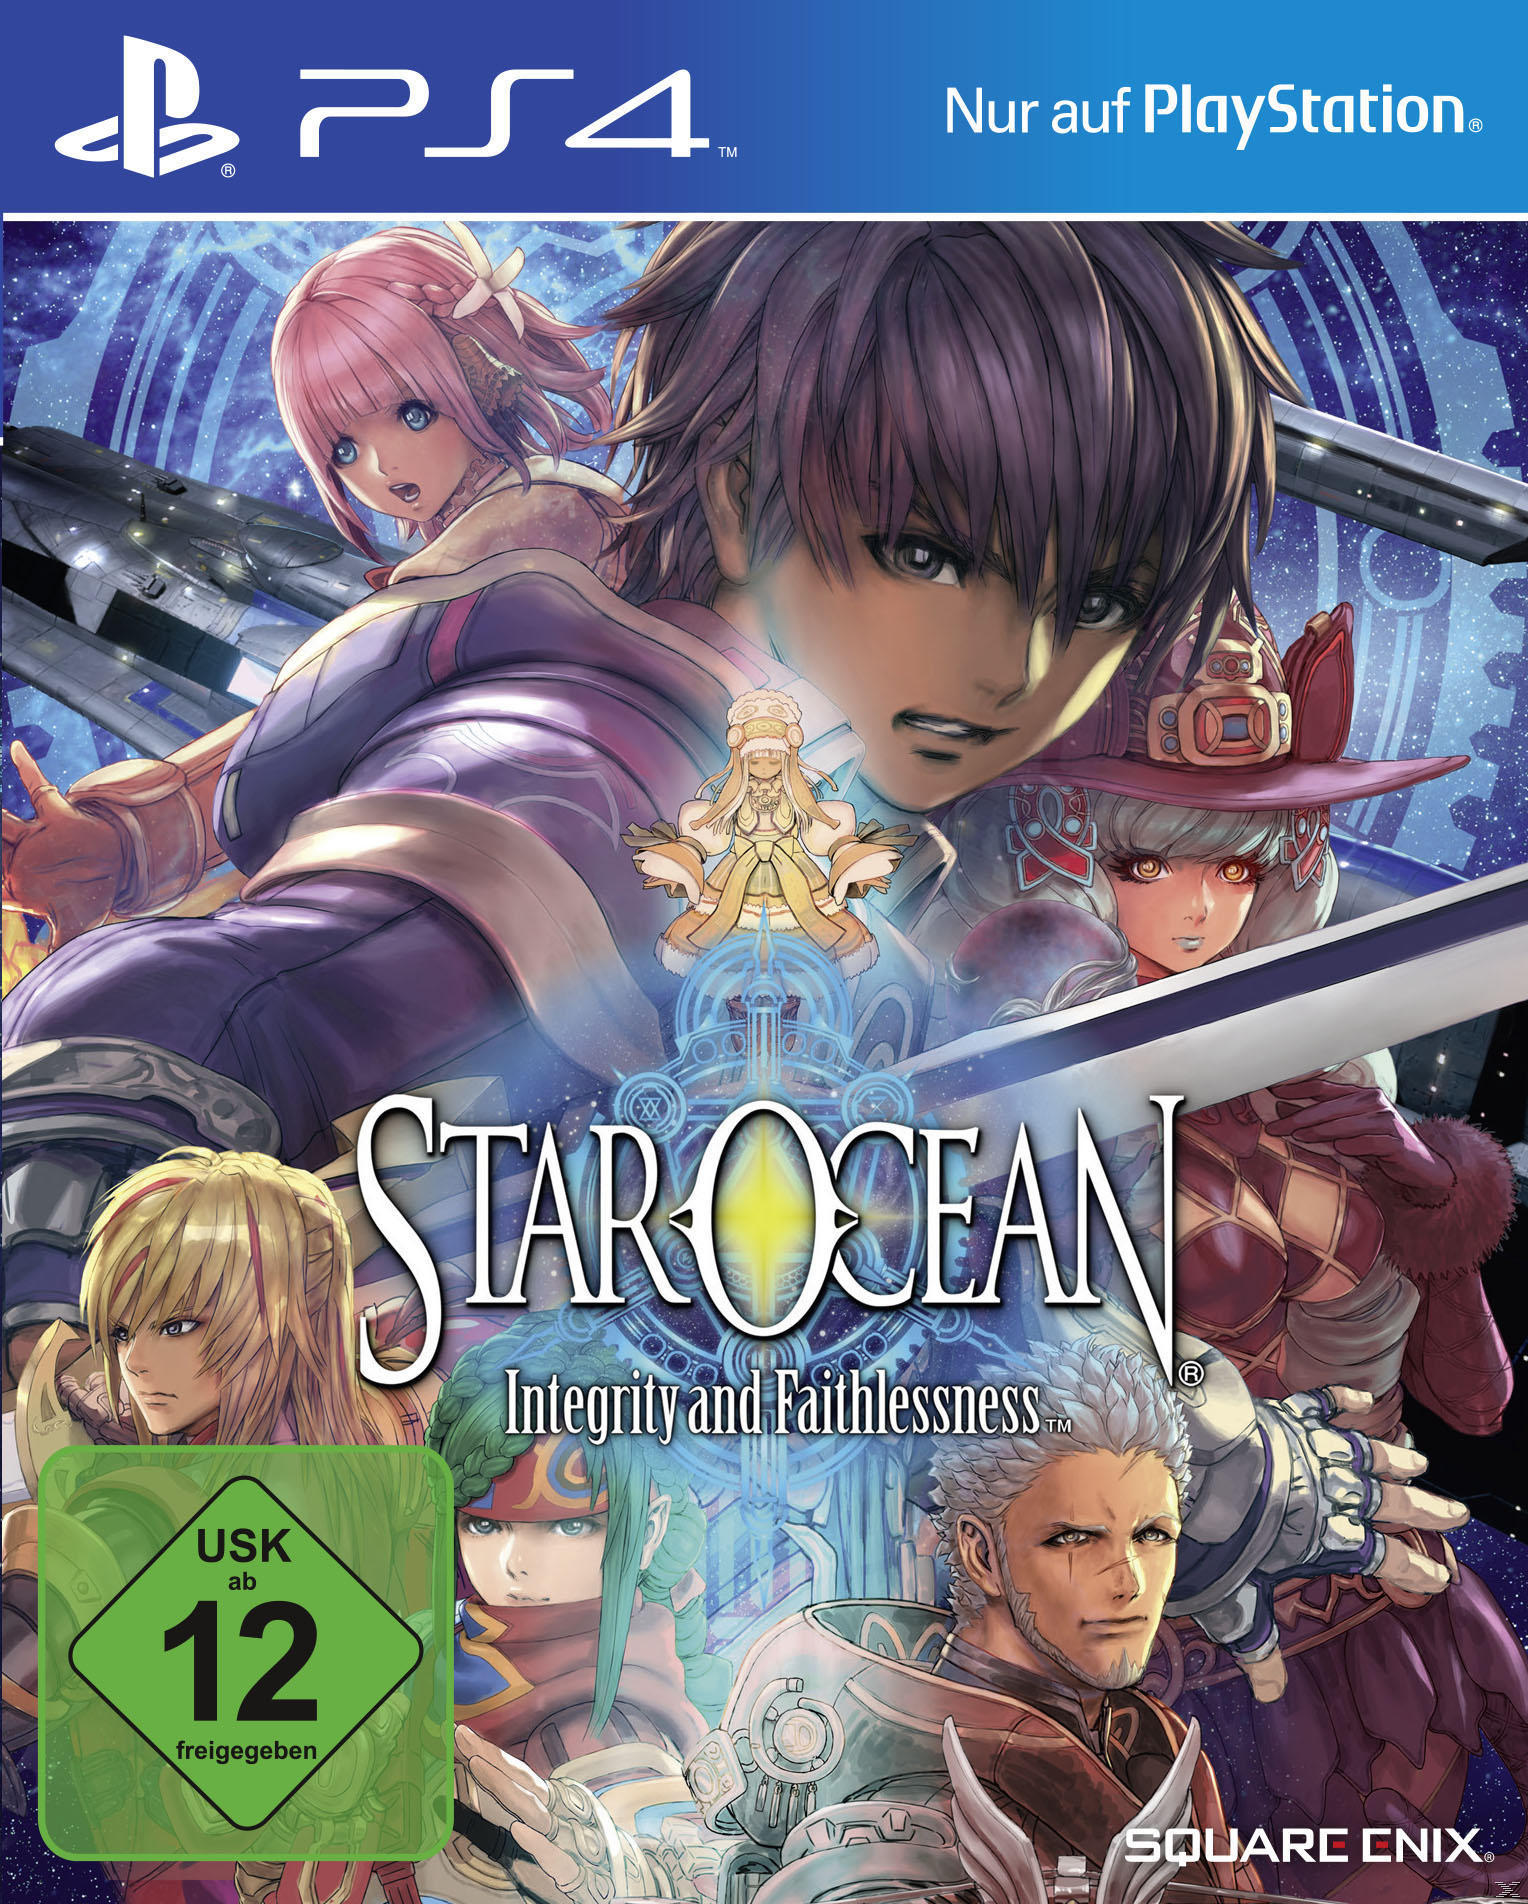 Star Ocean: Integrity and - Faithlessness [PlayStation 4